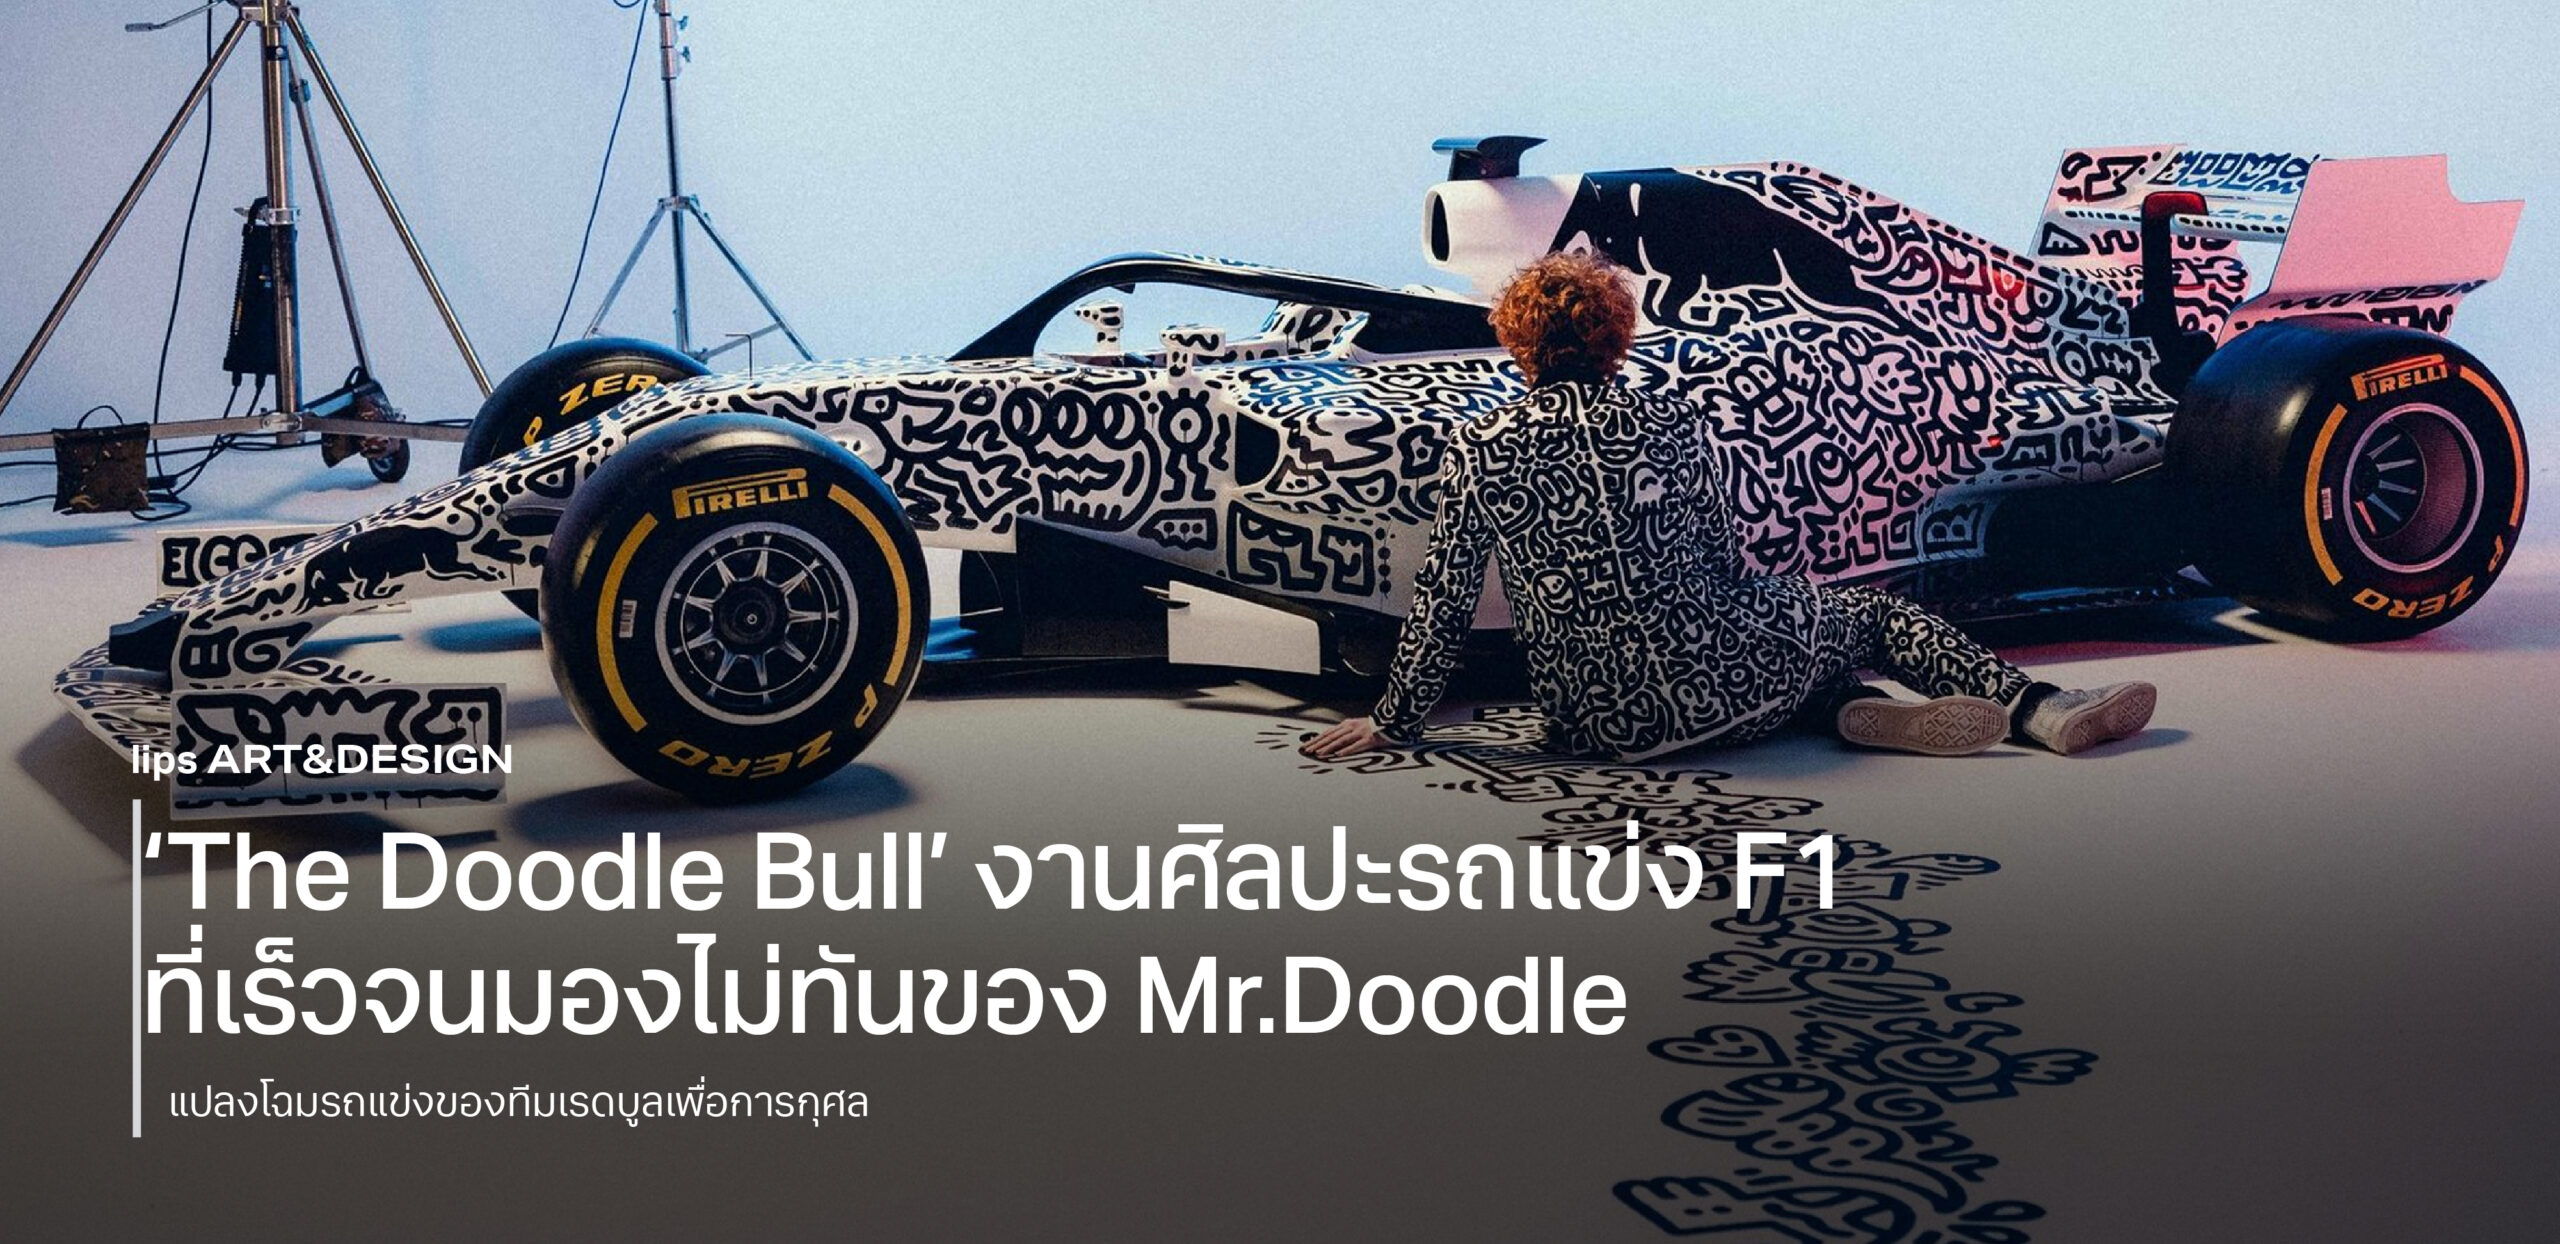 ‘The Doodle Bull’ งานศิลปะรถแข่ง F1 ที่เร็วจนมองไม่ทันของ Mr.Doodle